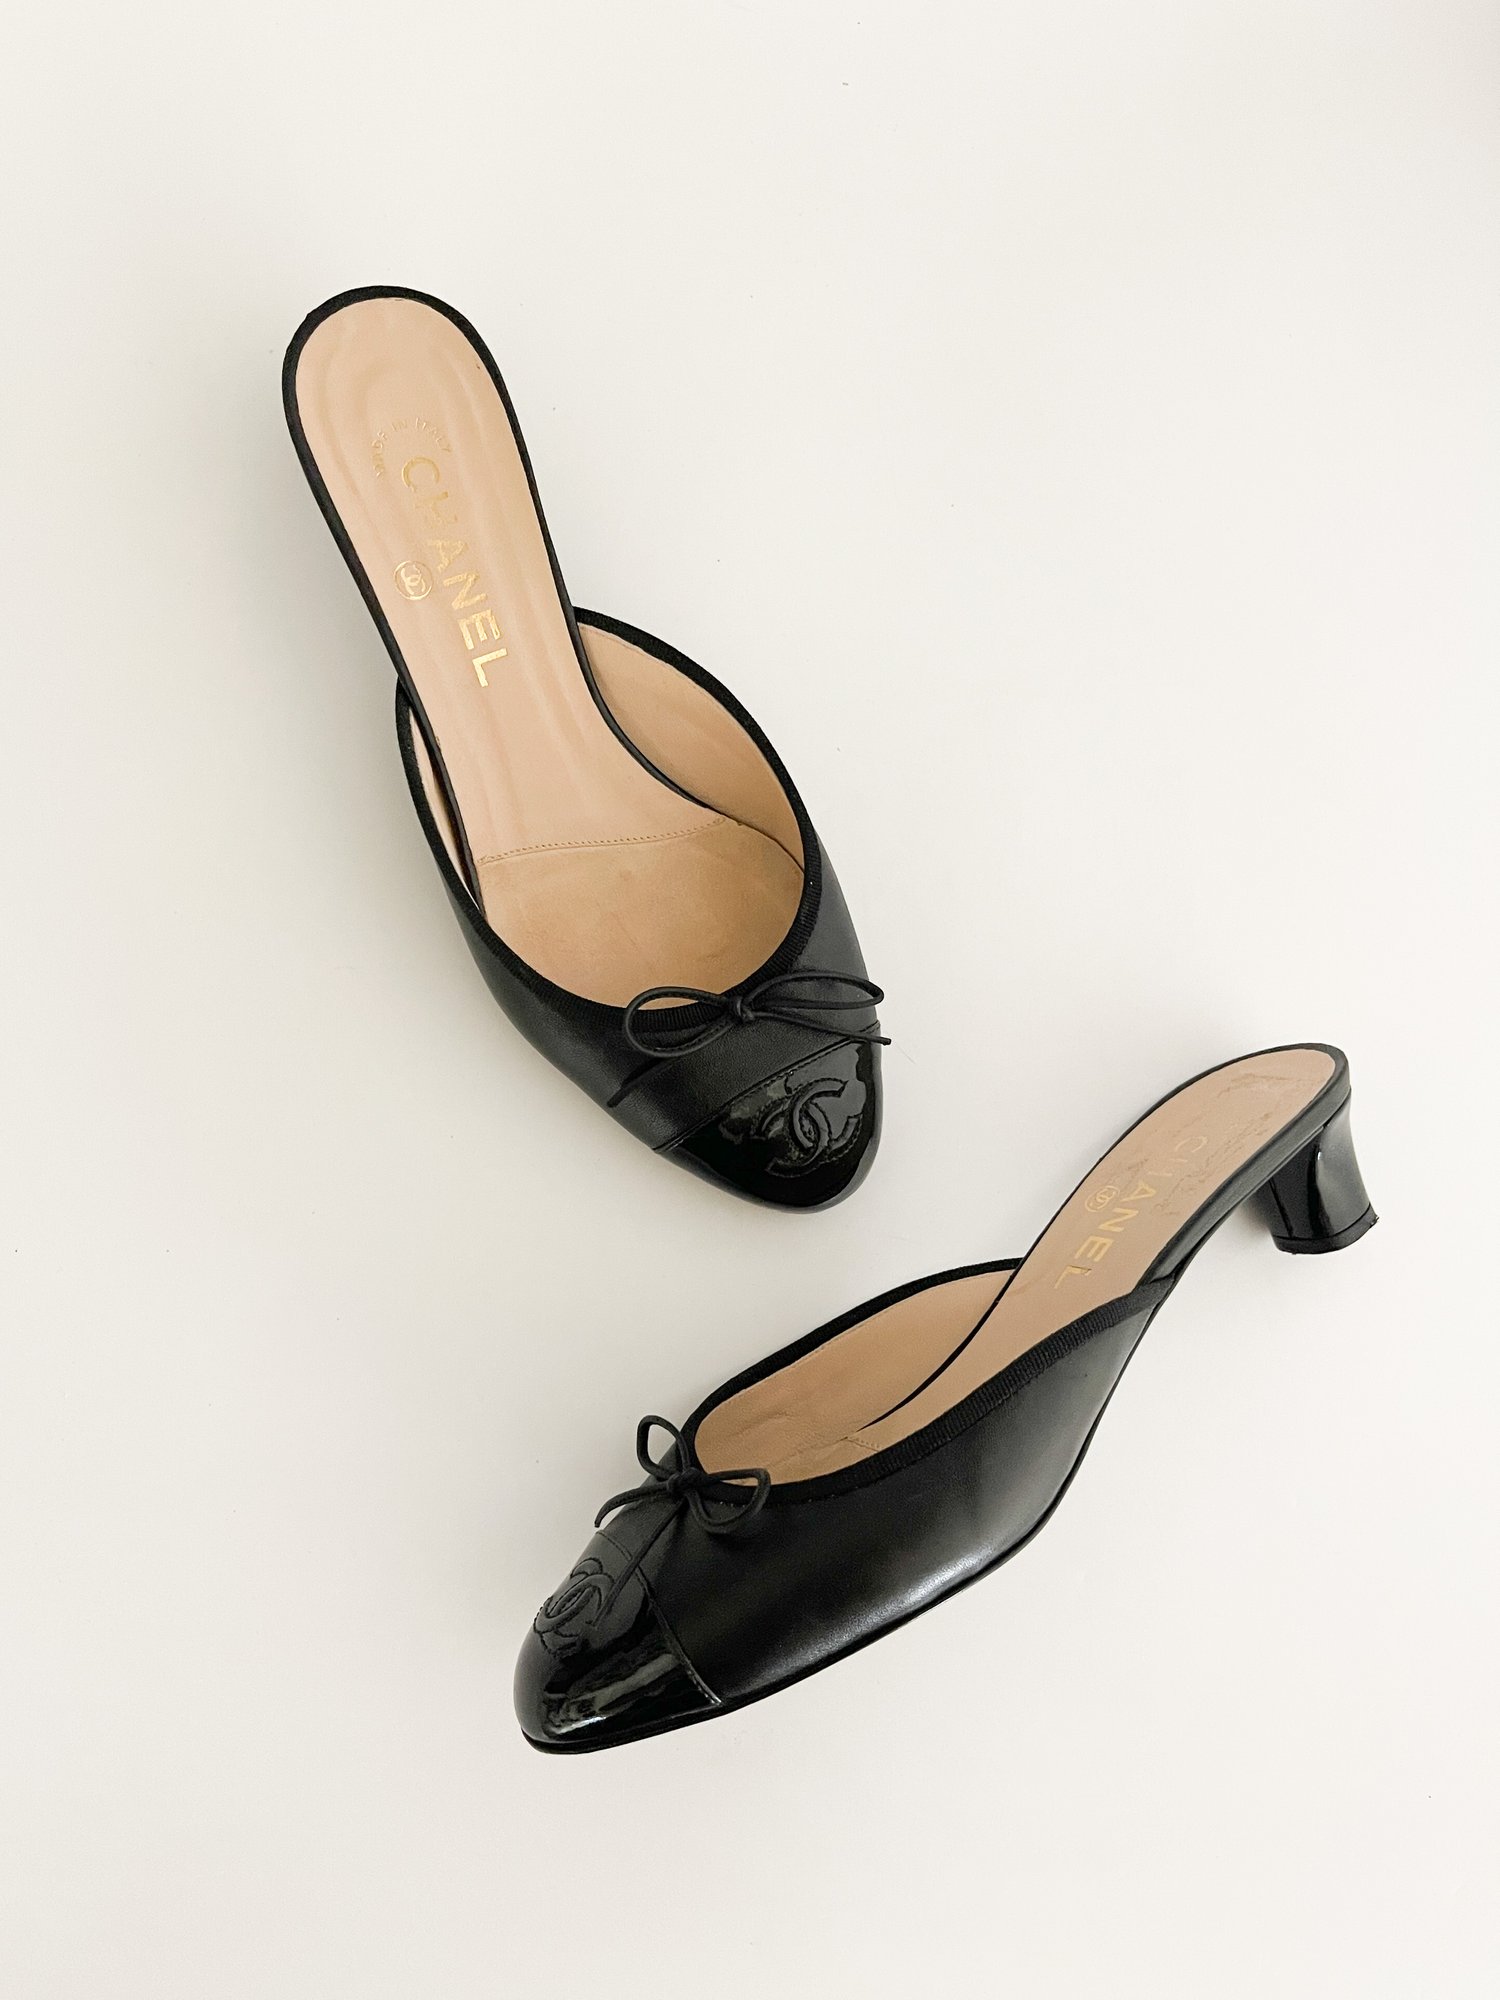 Chanel Iconic CC Pink & White Toe Cap Bow Slingback Kitten Heels (US  8-8.5 / IT 39) — sororité.